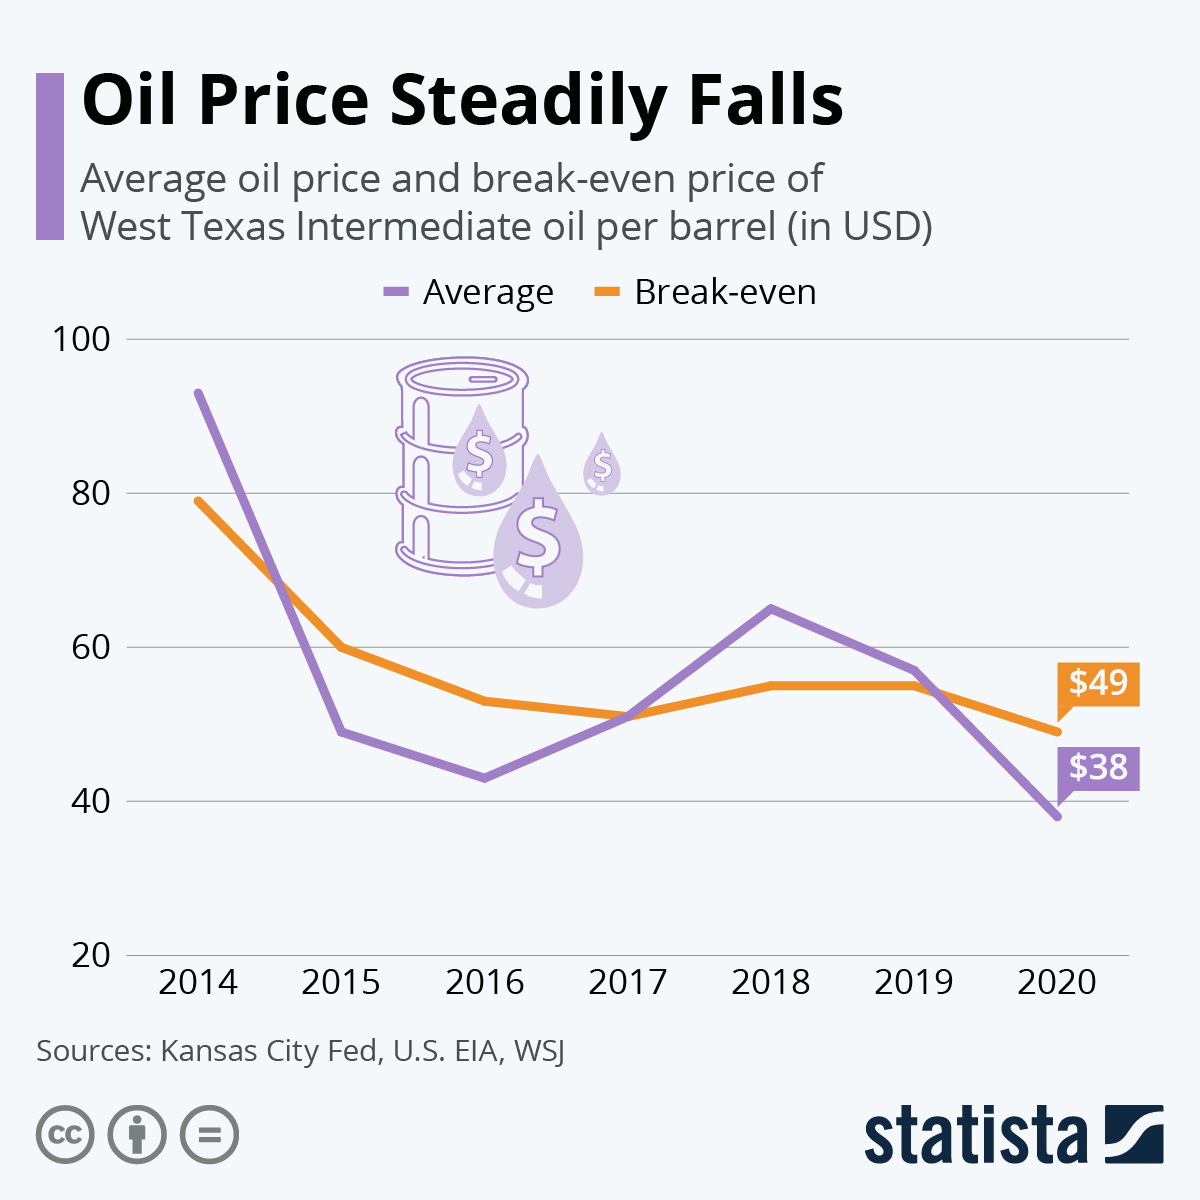 Oil Price Steadily Falls